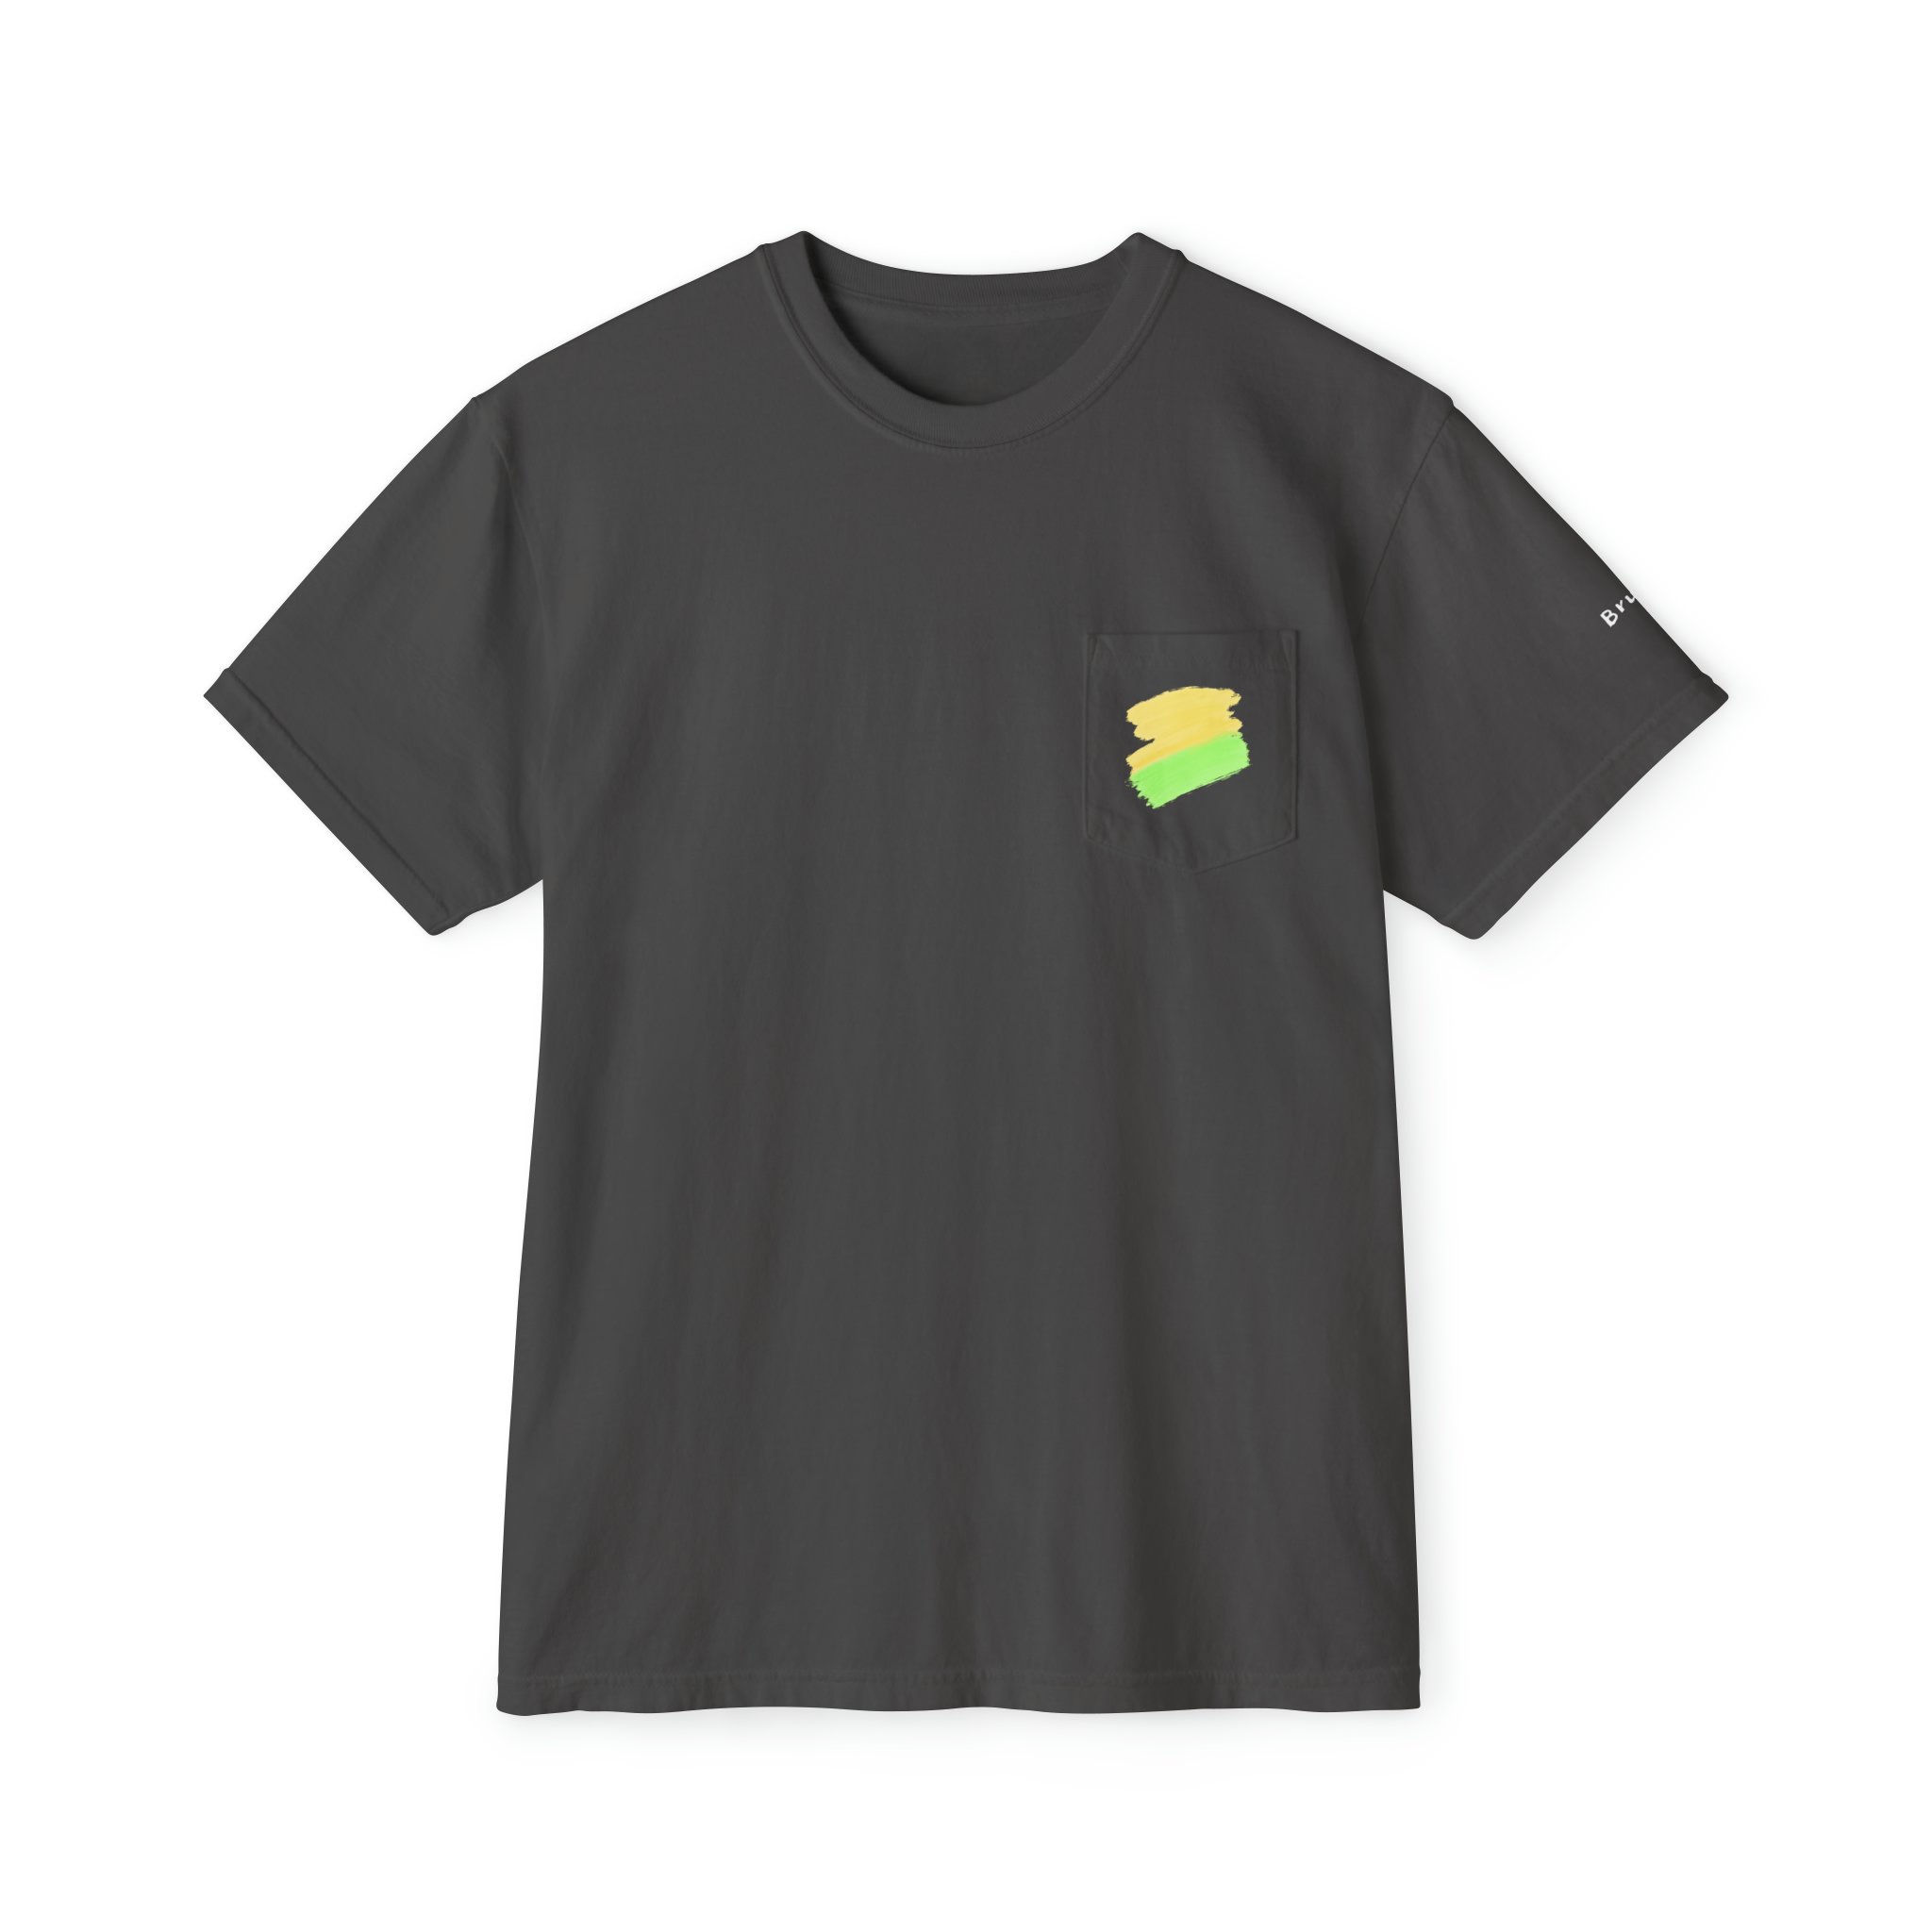 Unisex Pocket T-Shirt #8 Front (18)